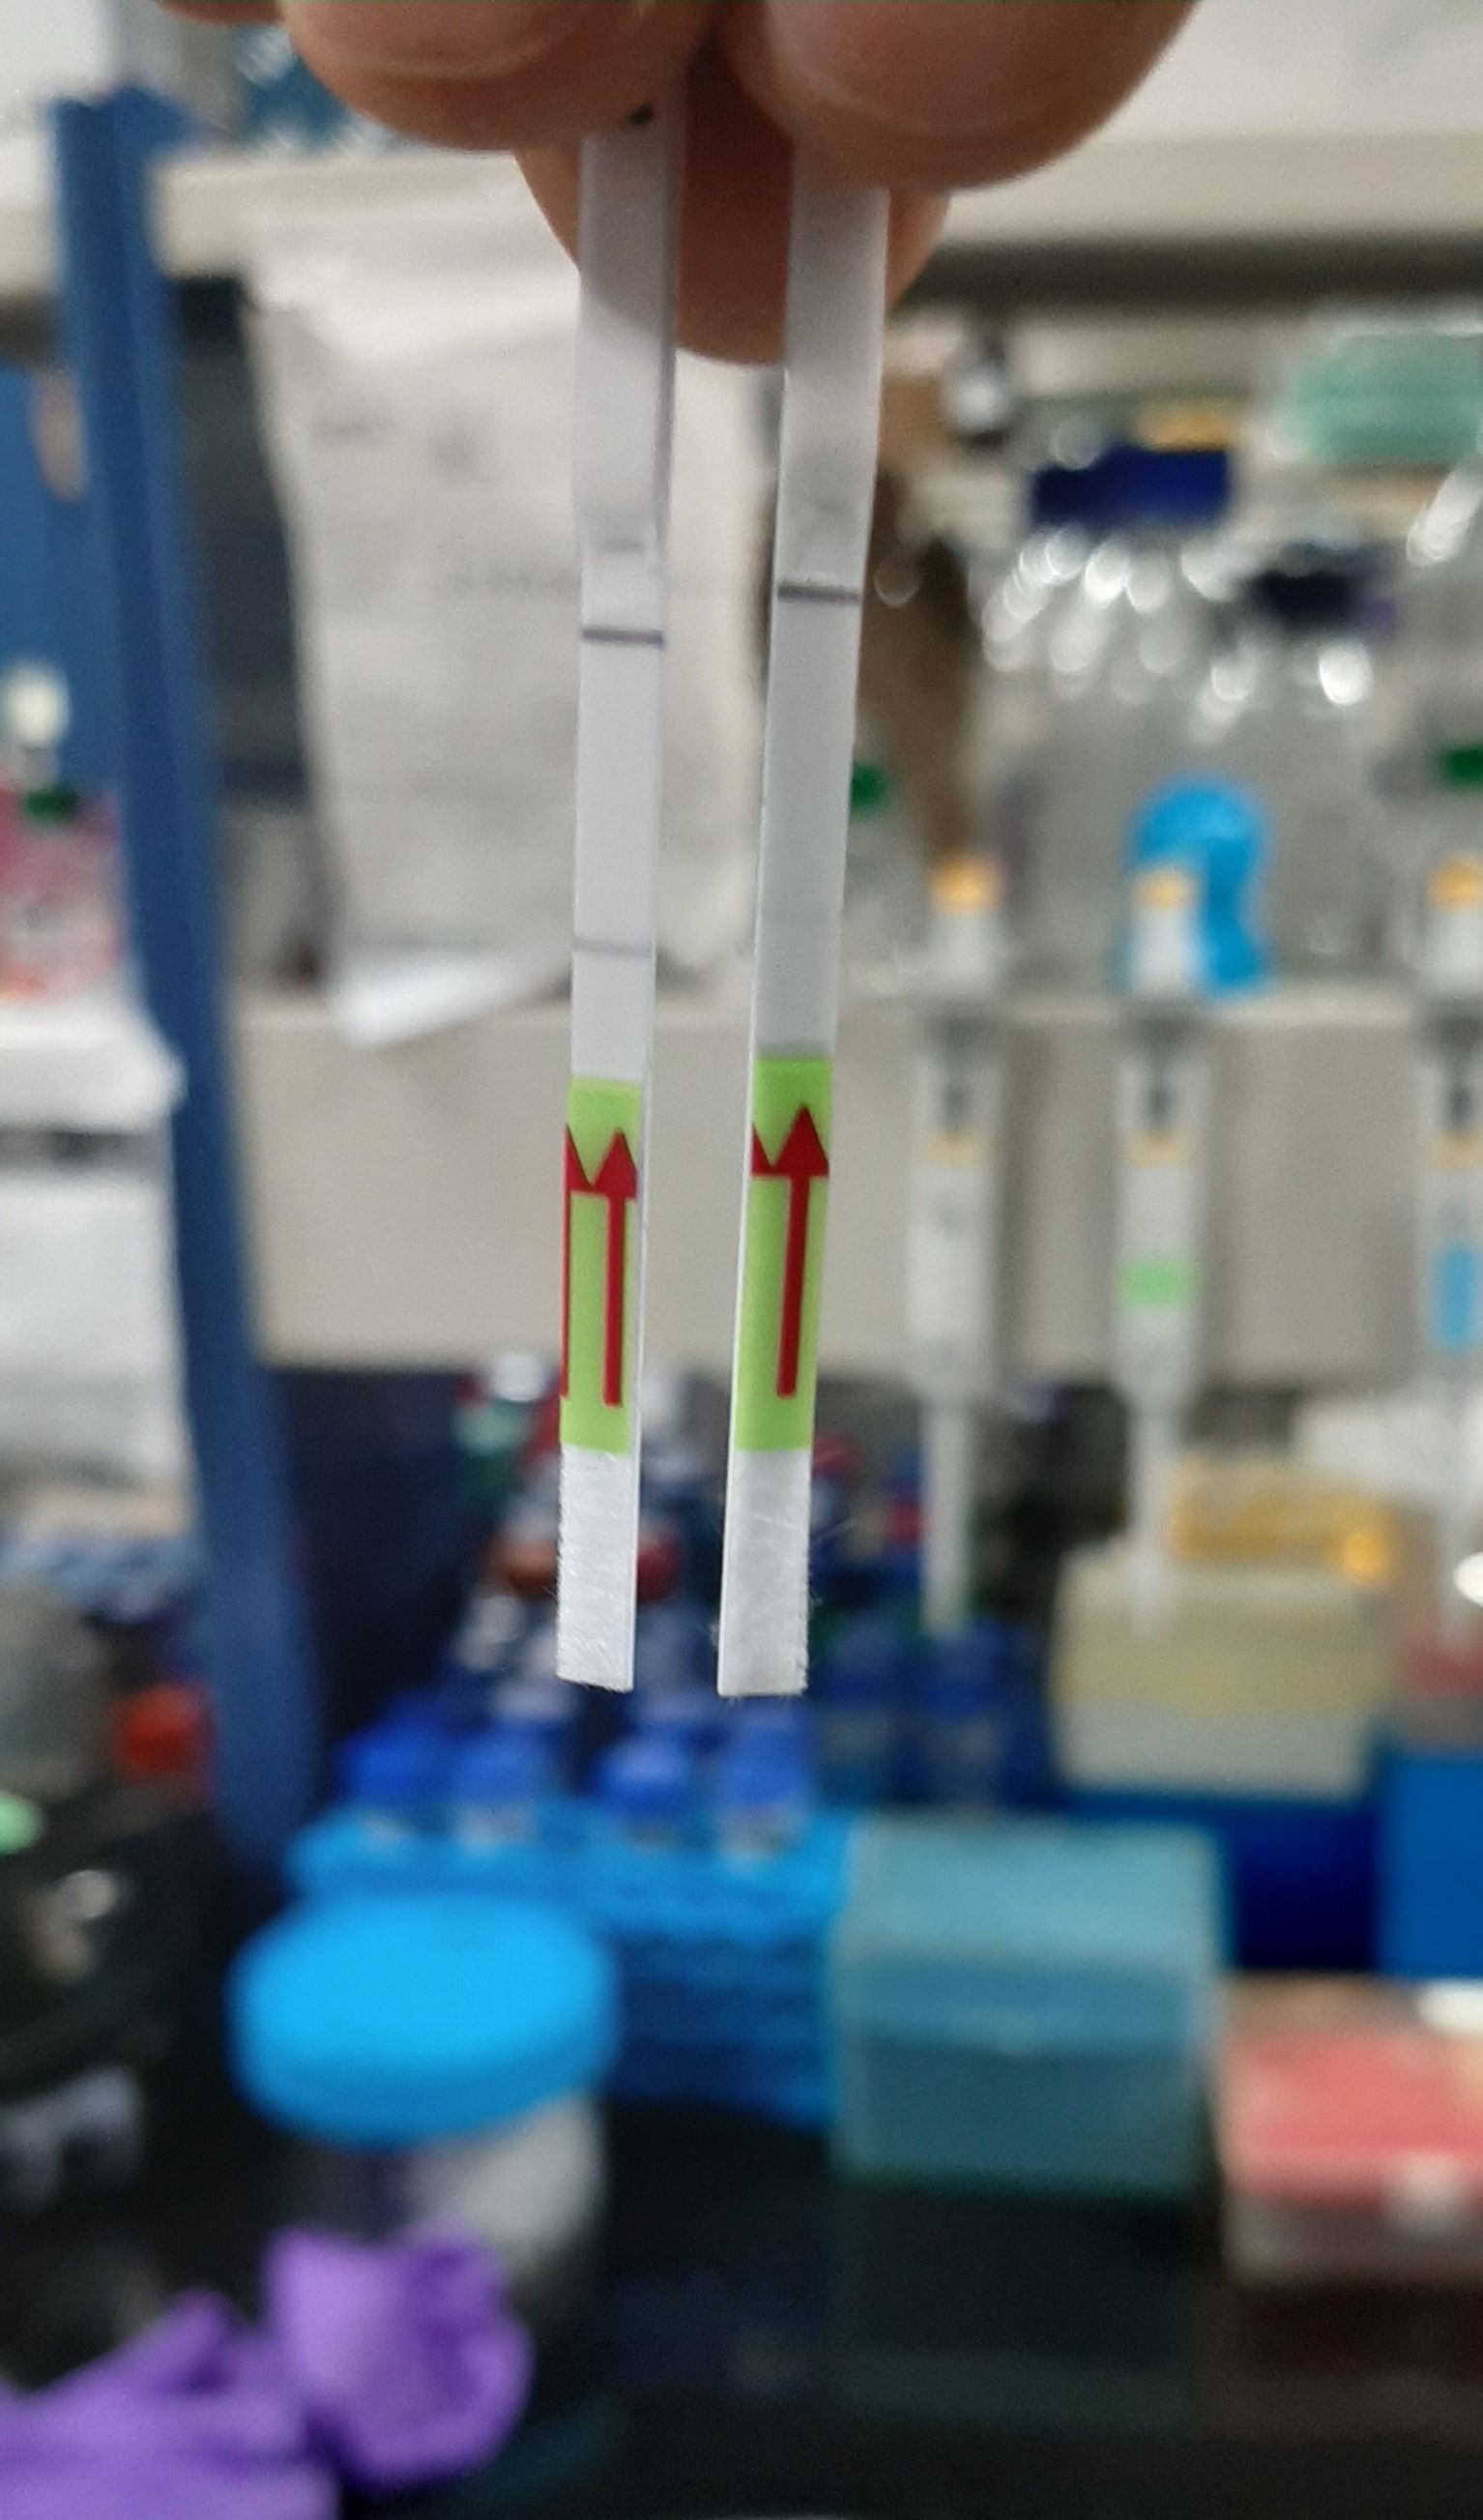 CRISPR paper strip test